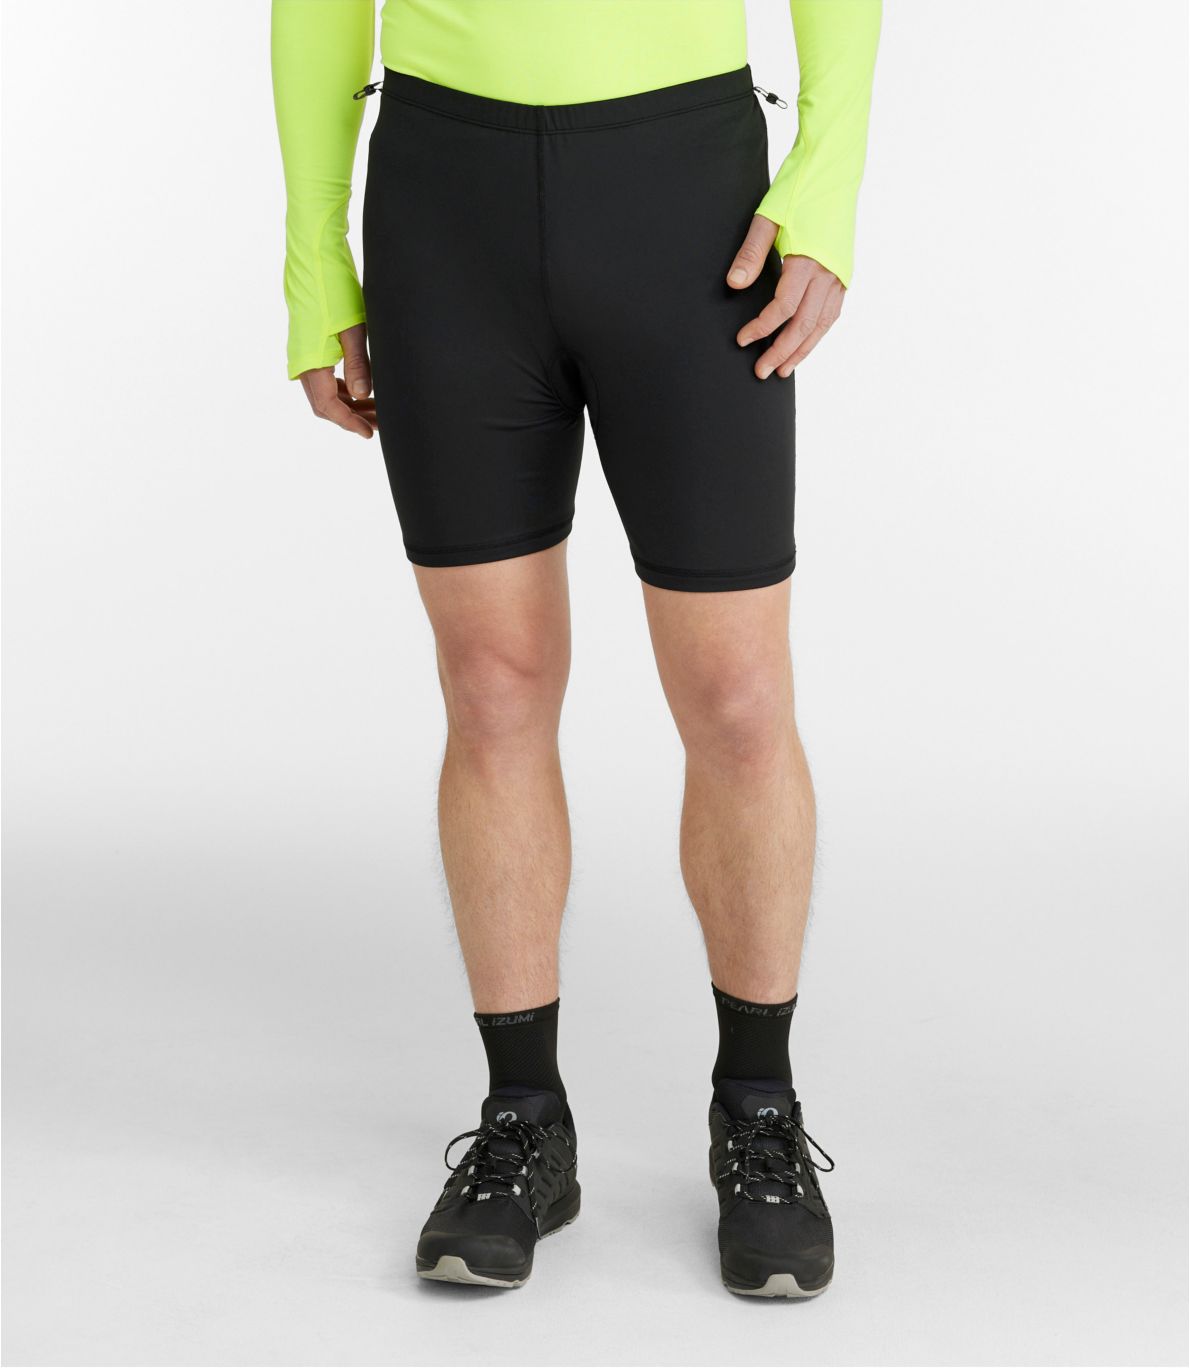 Men's Comfort Cycling Liner Short